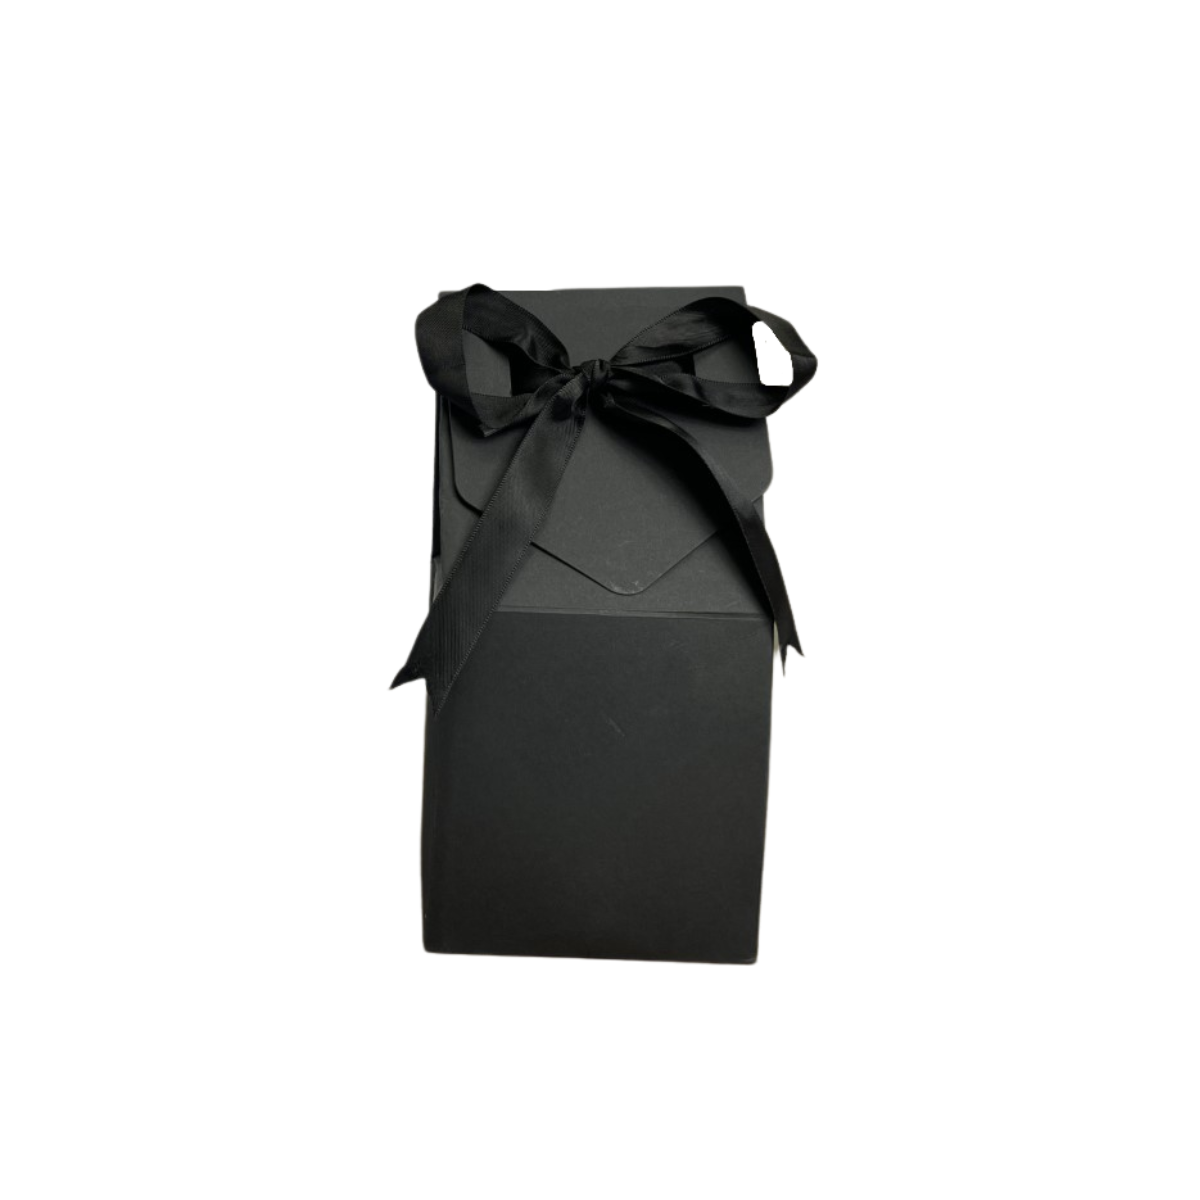 Deluxe Black Gift Box